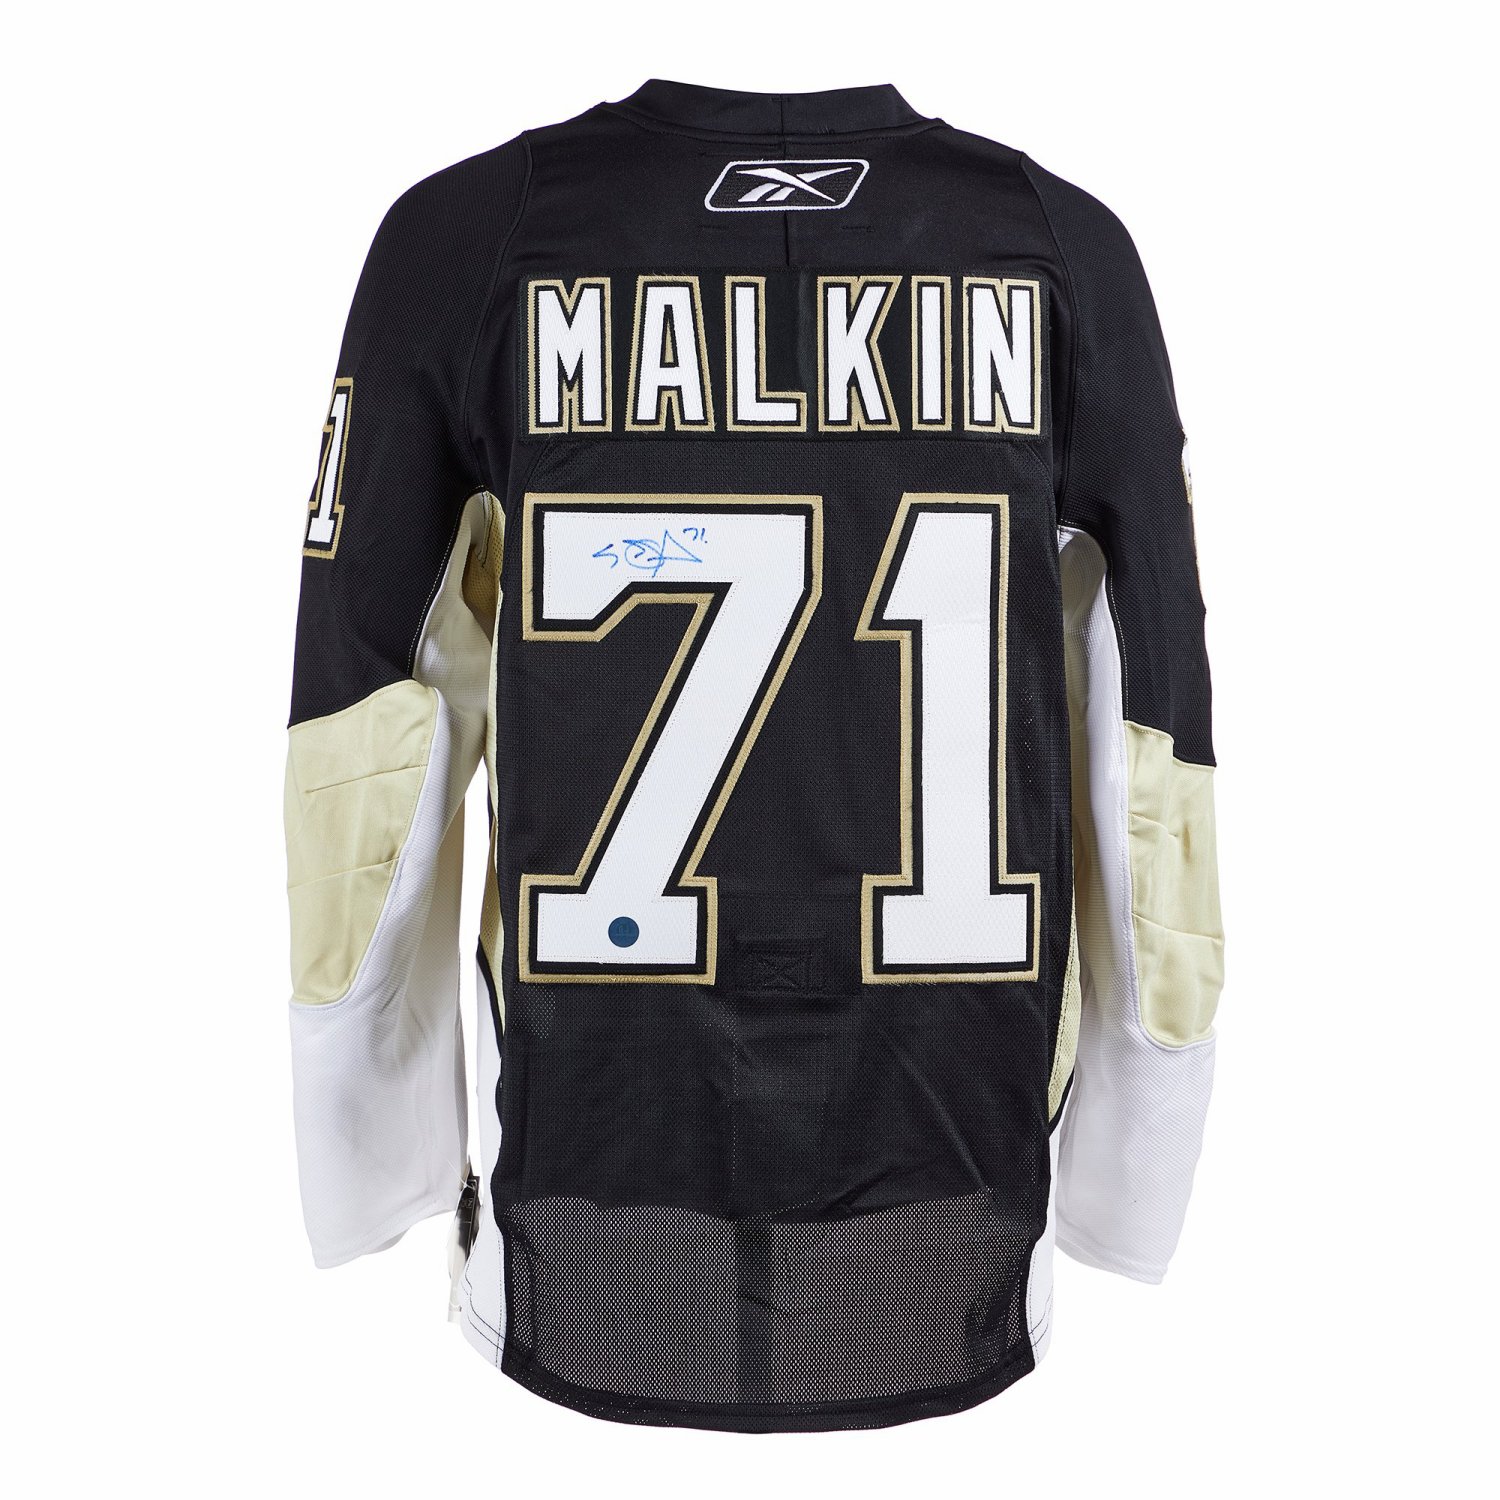 Evgeni Malkin autographed Jersey (Pittsburgh Penguins)